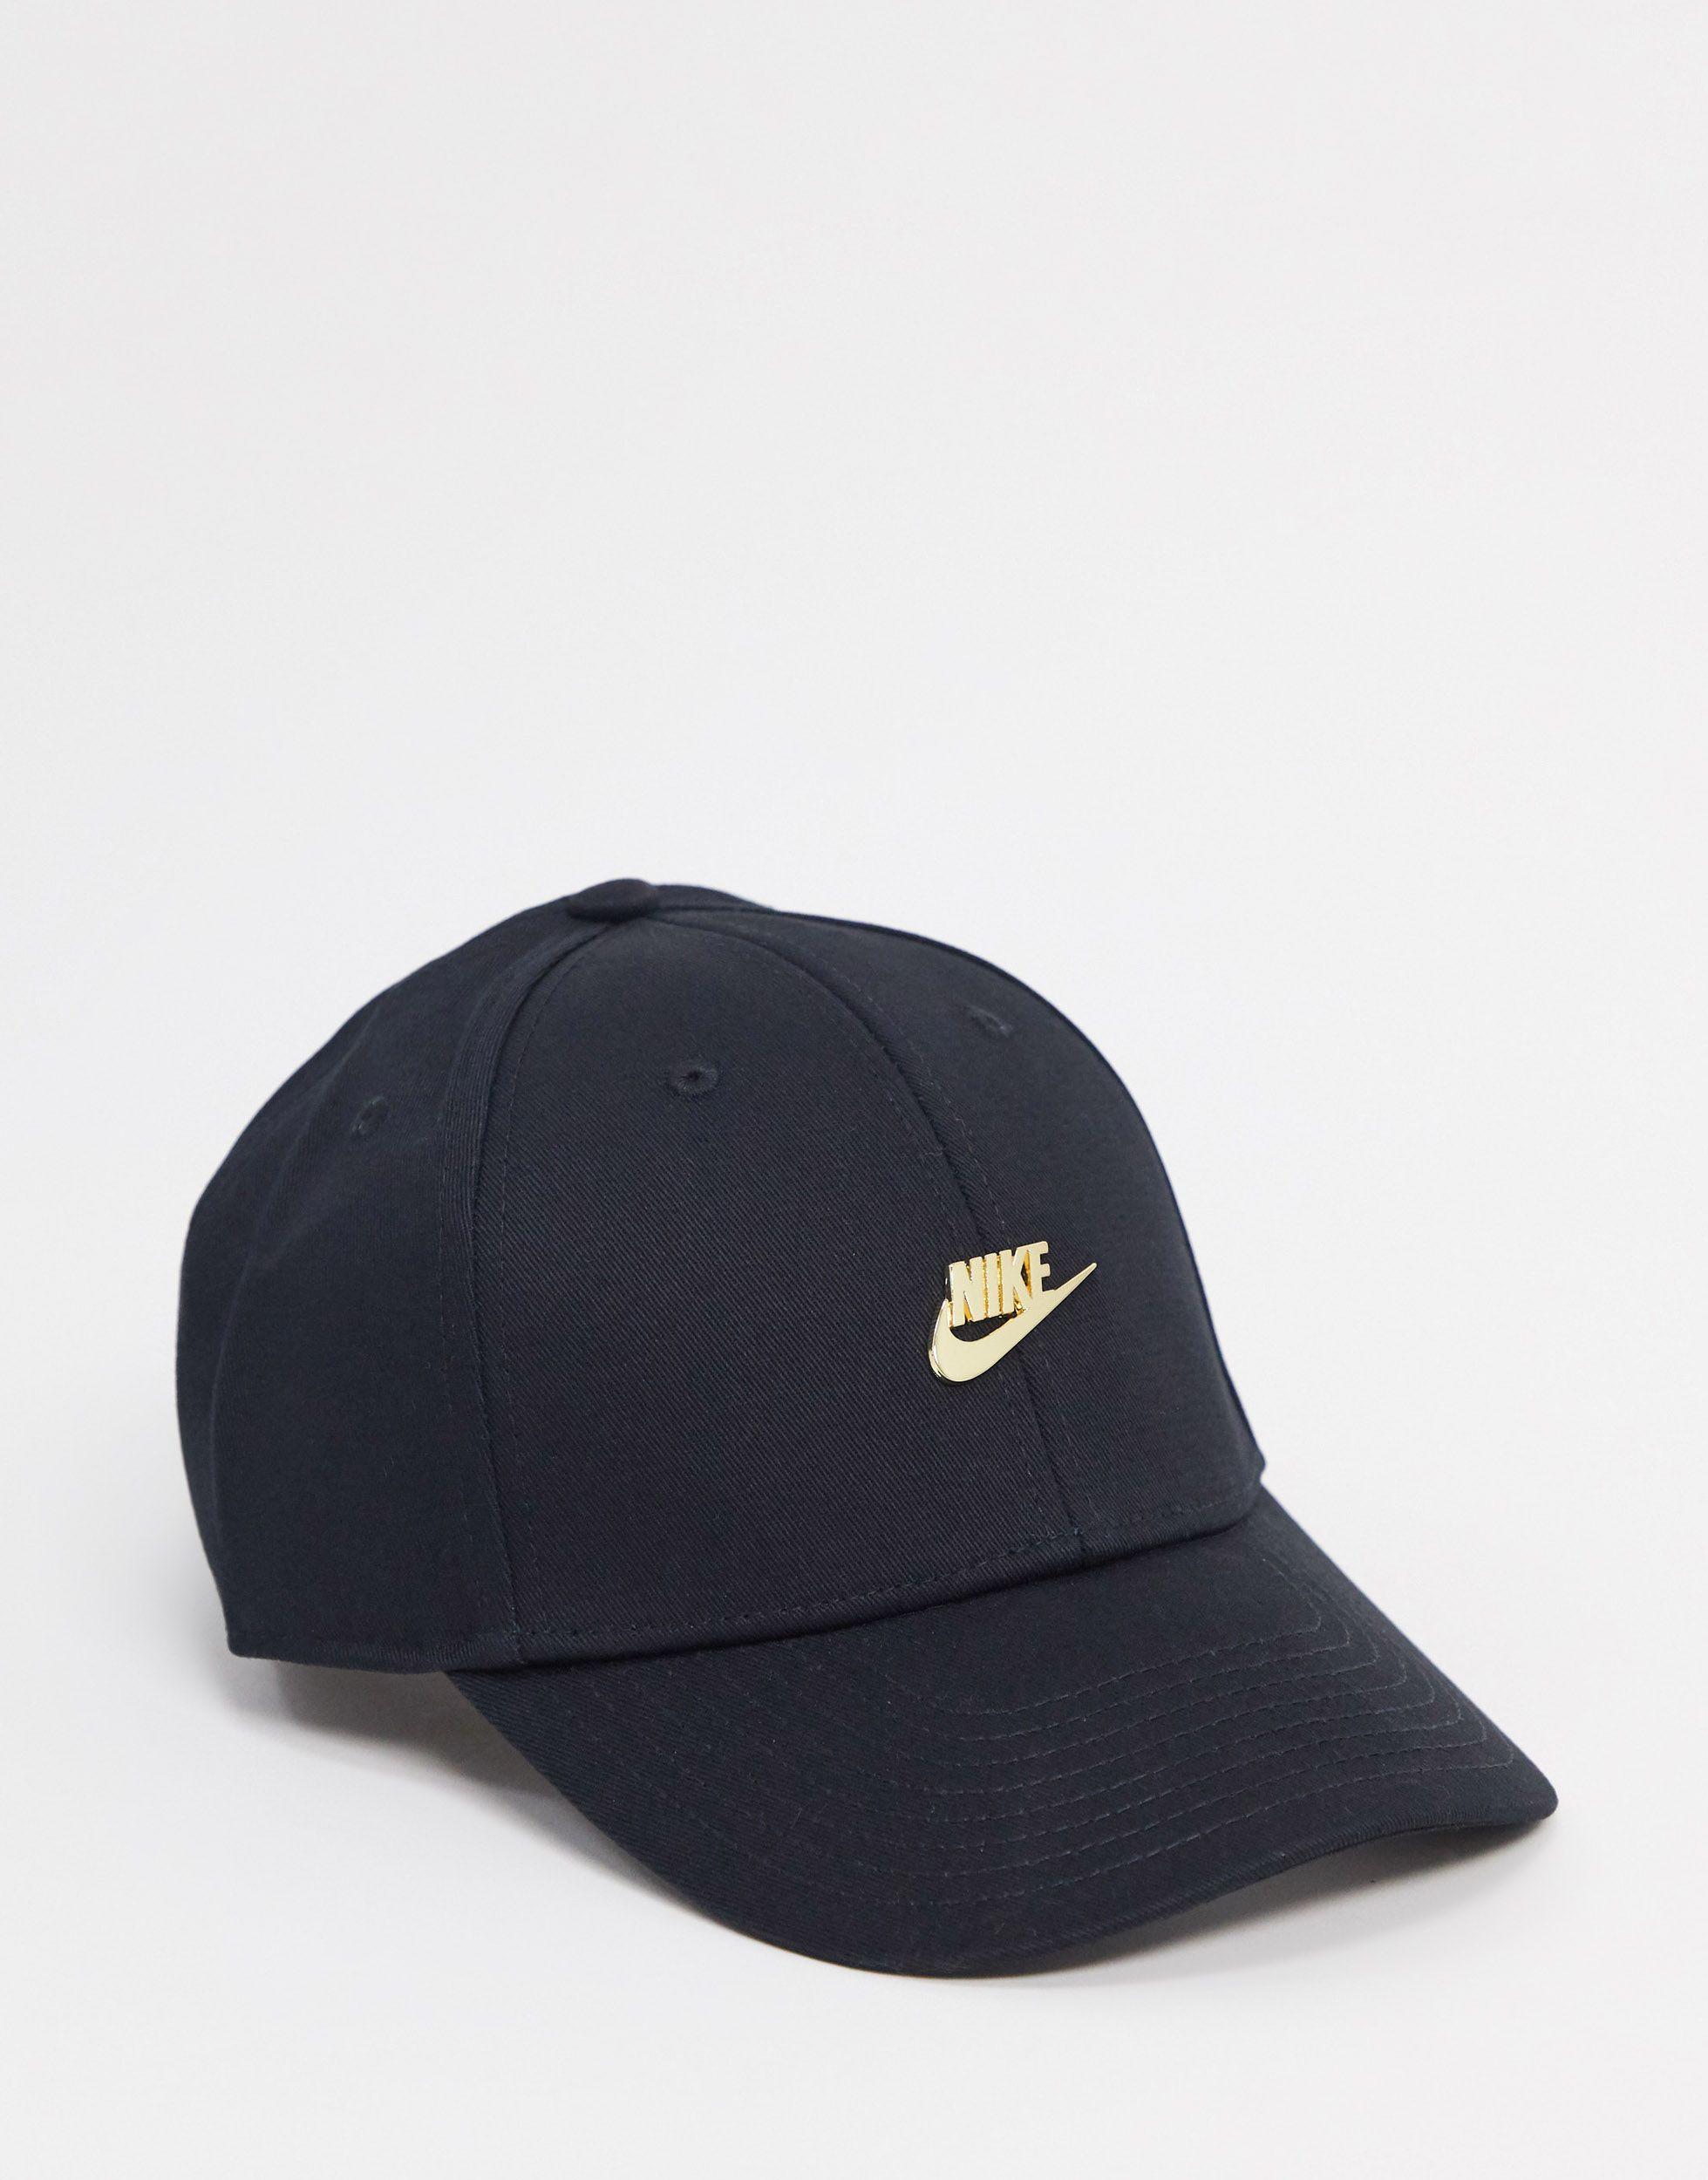 Nike Metallic Cap With Gold Logo in Black for Men - Lyst